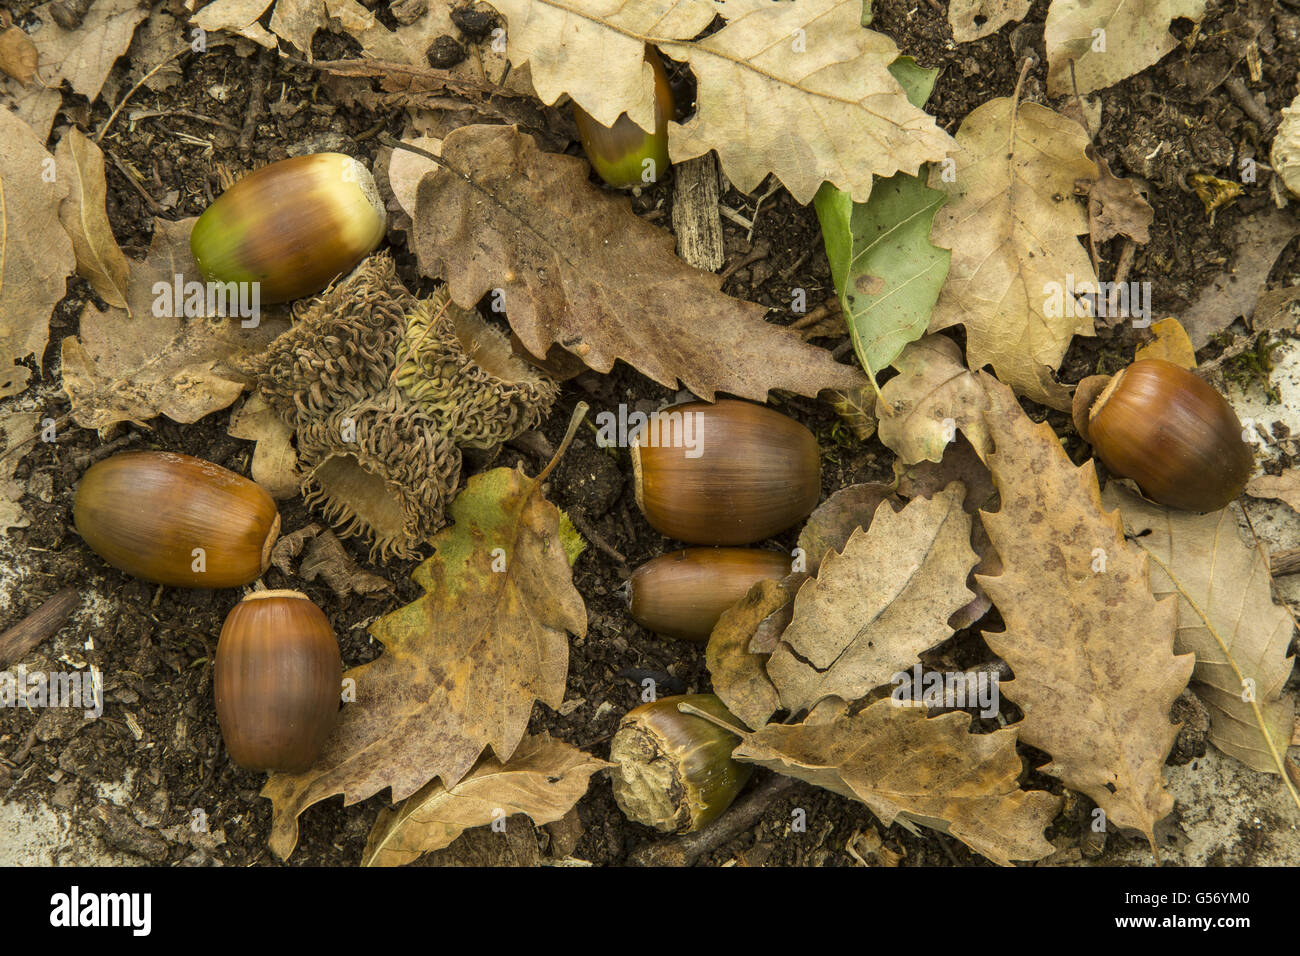 Turkey Oak (Quercus cerris) fallen acorns, cups and leaves, Greece, October Stock Photo